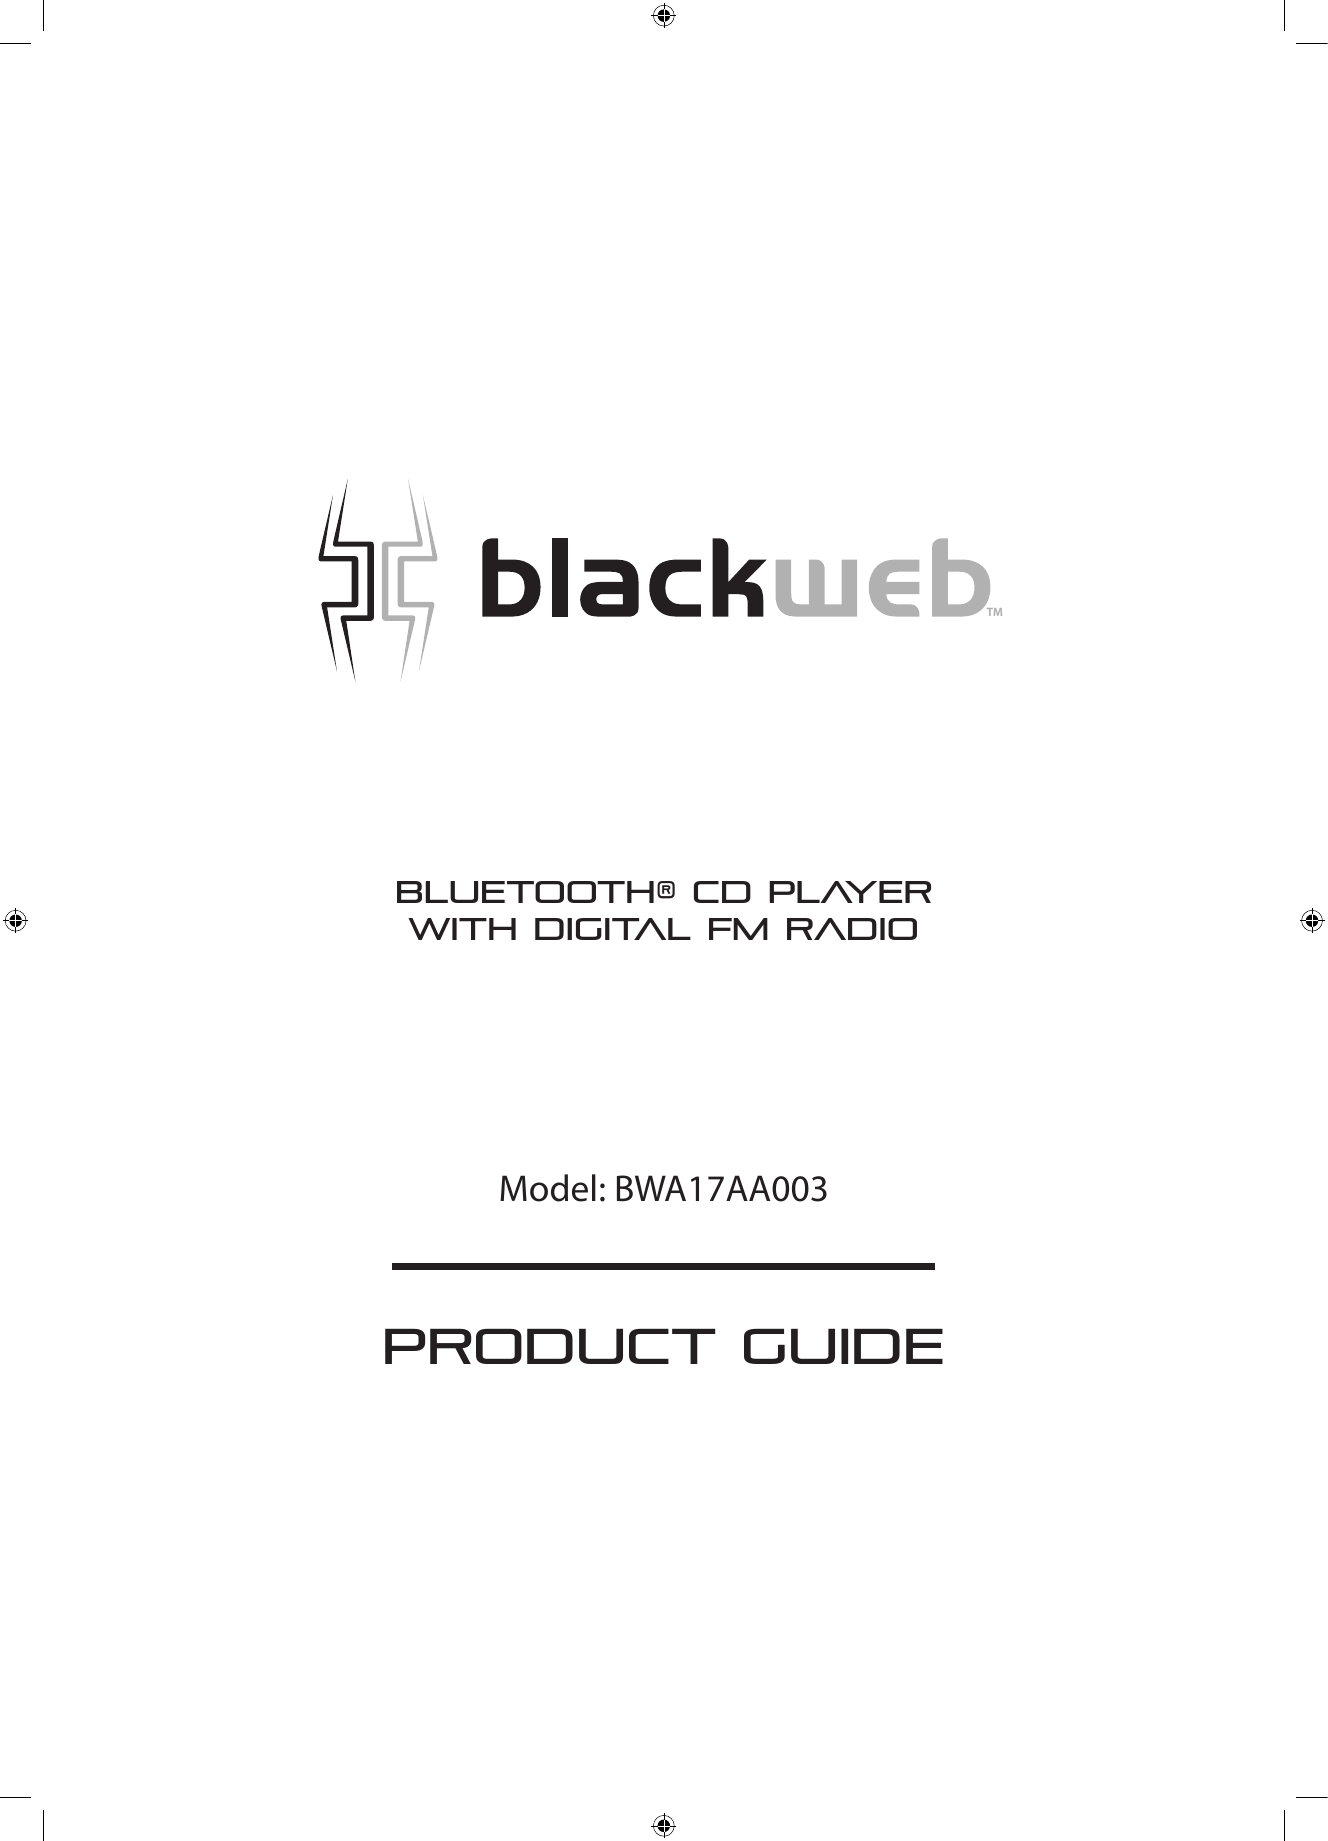 Blackweb bluetooth cd player manual